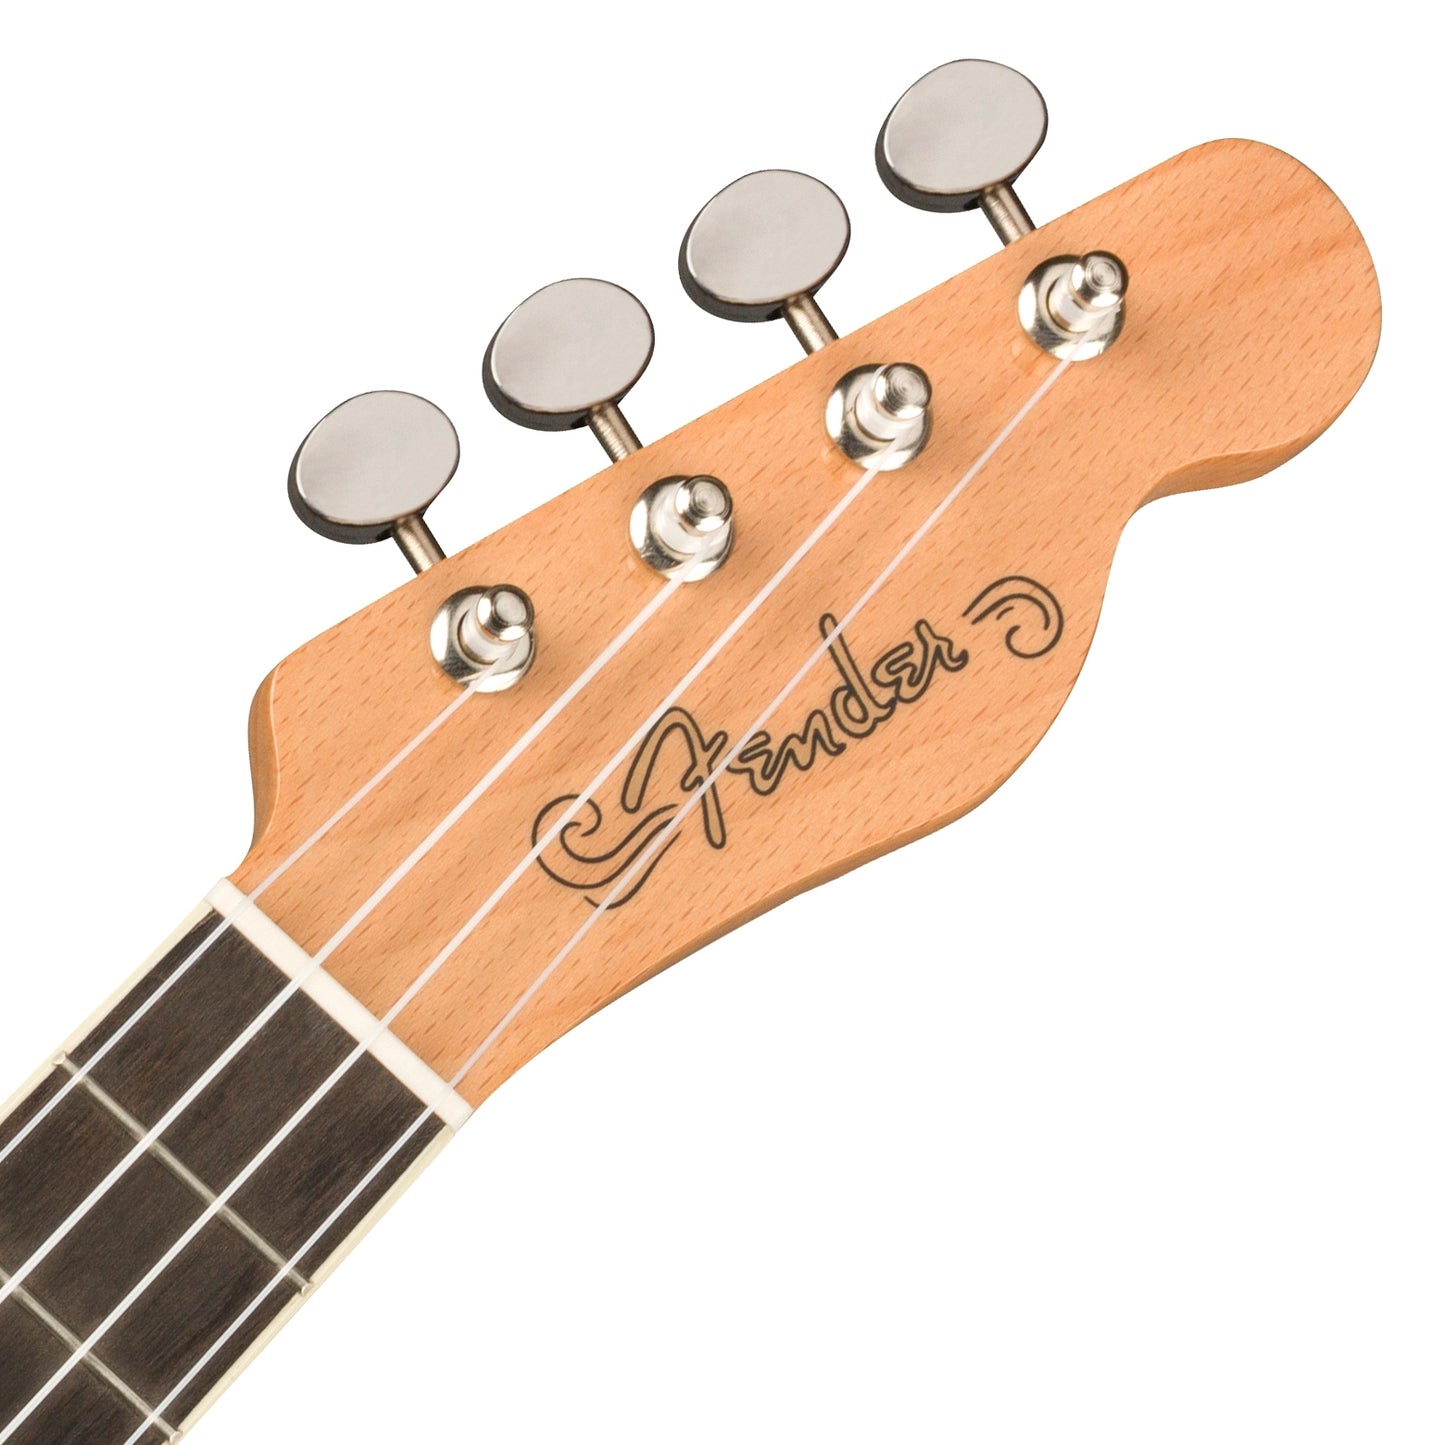 Fender Fullerton Telecaster Concert Ukulele Acoustic Electric 4 String Guitar with Built-in Tuner, Volume / Tone Controls (Black)